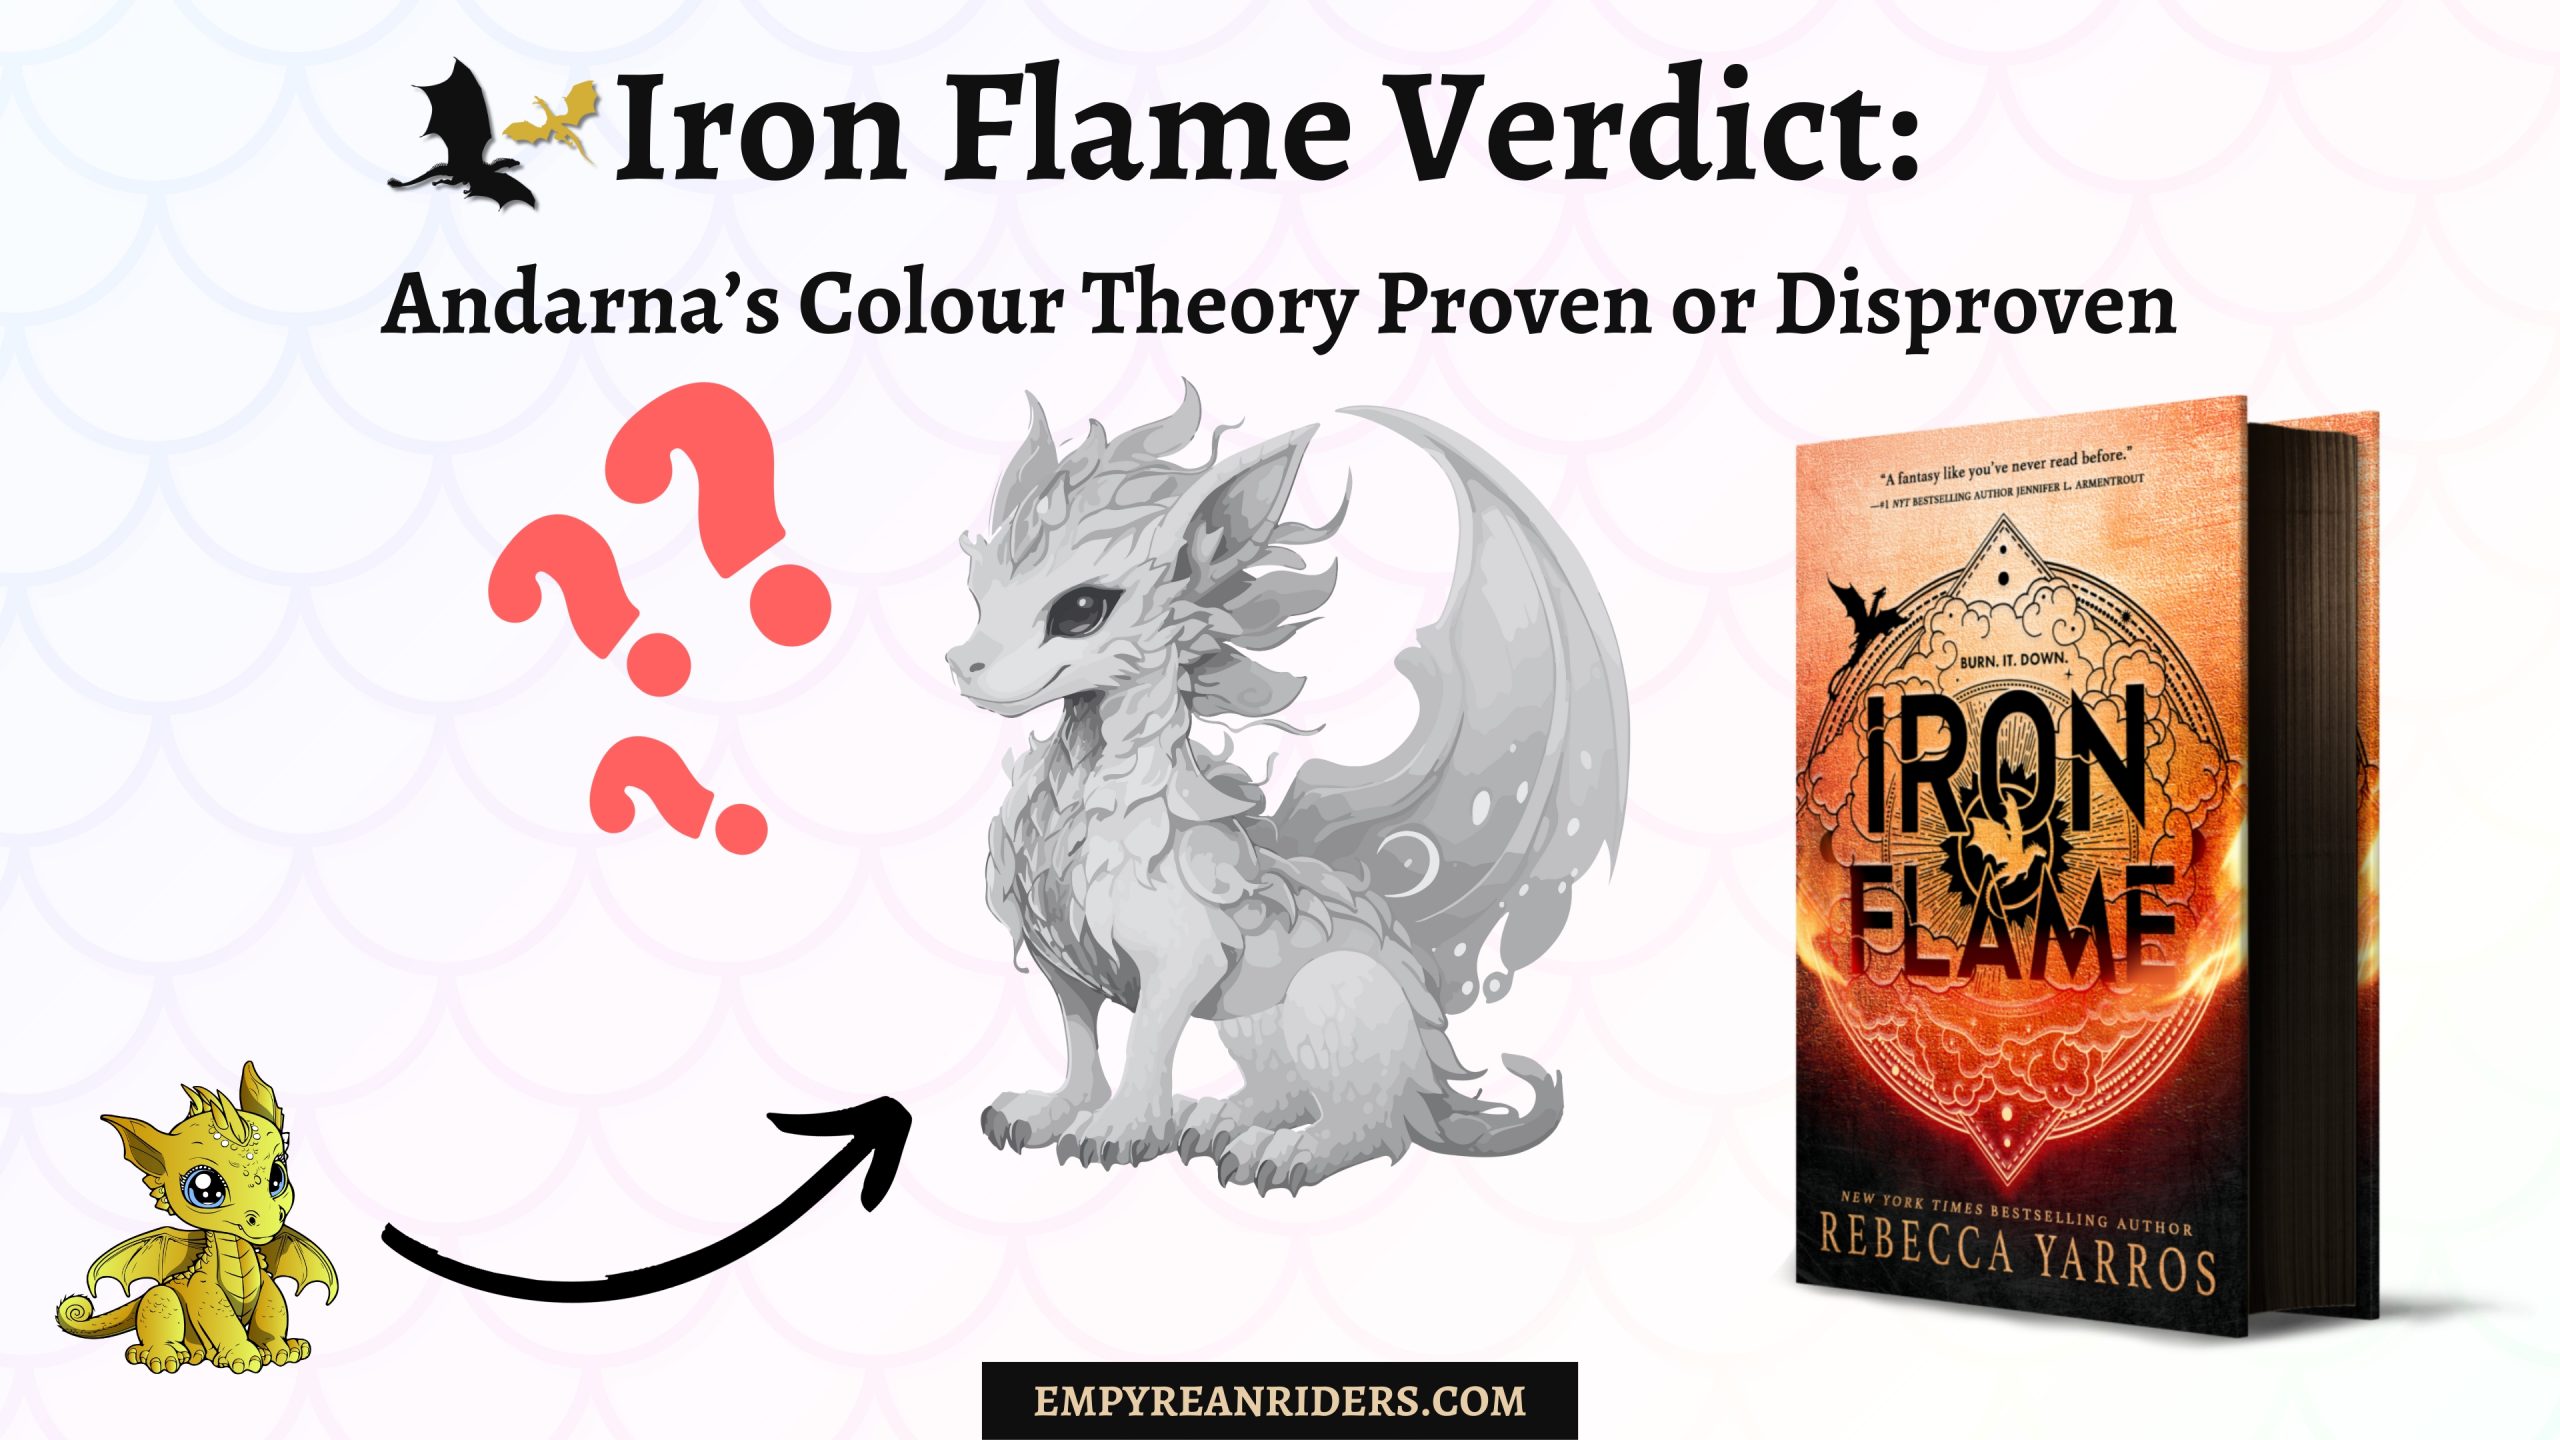 Iron Flame verdict - Andarnas Colour Theory Proven or Disproven